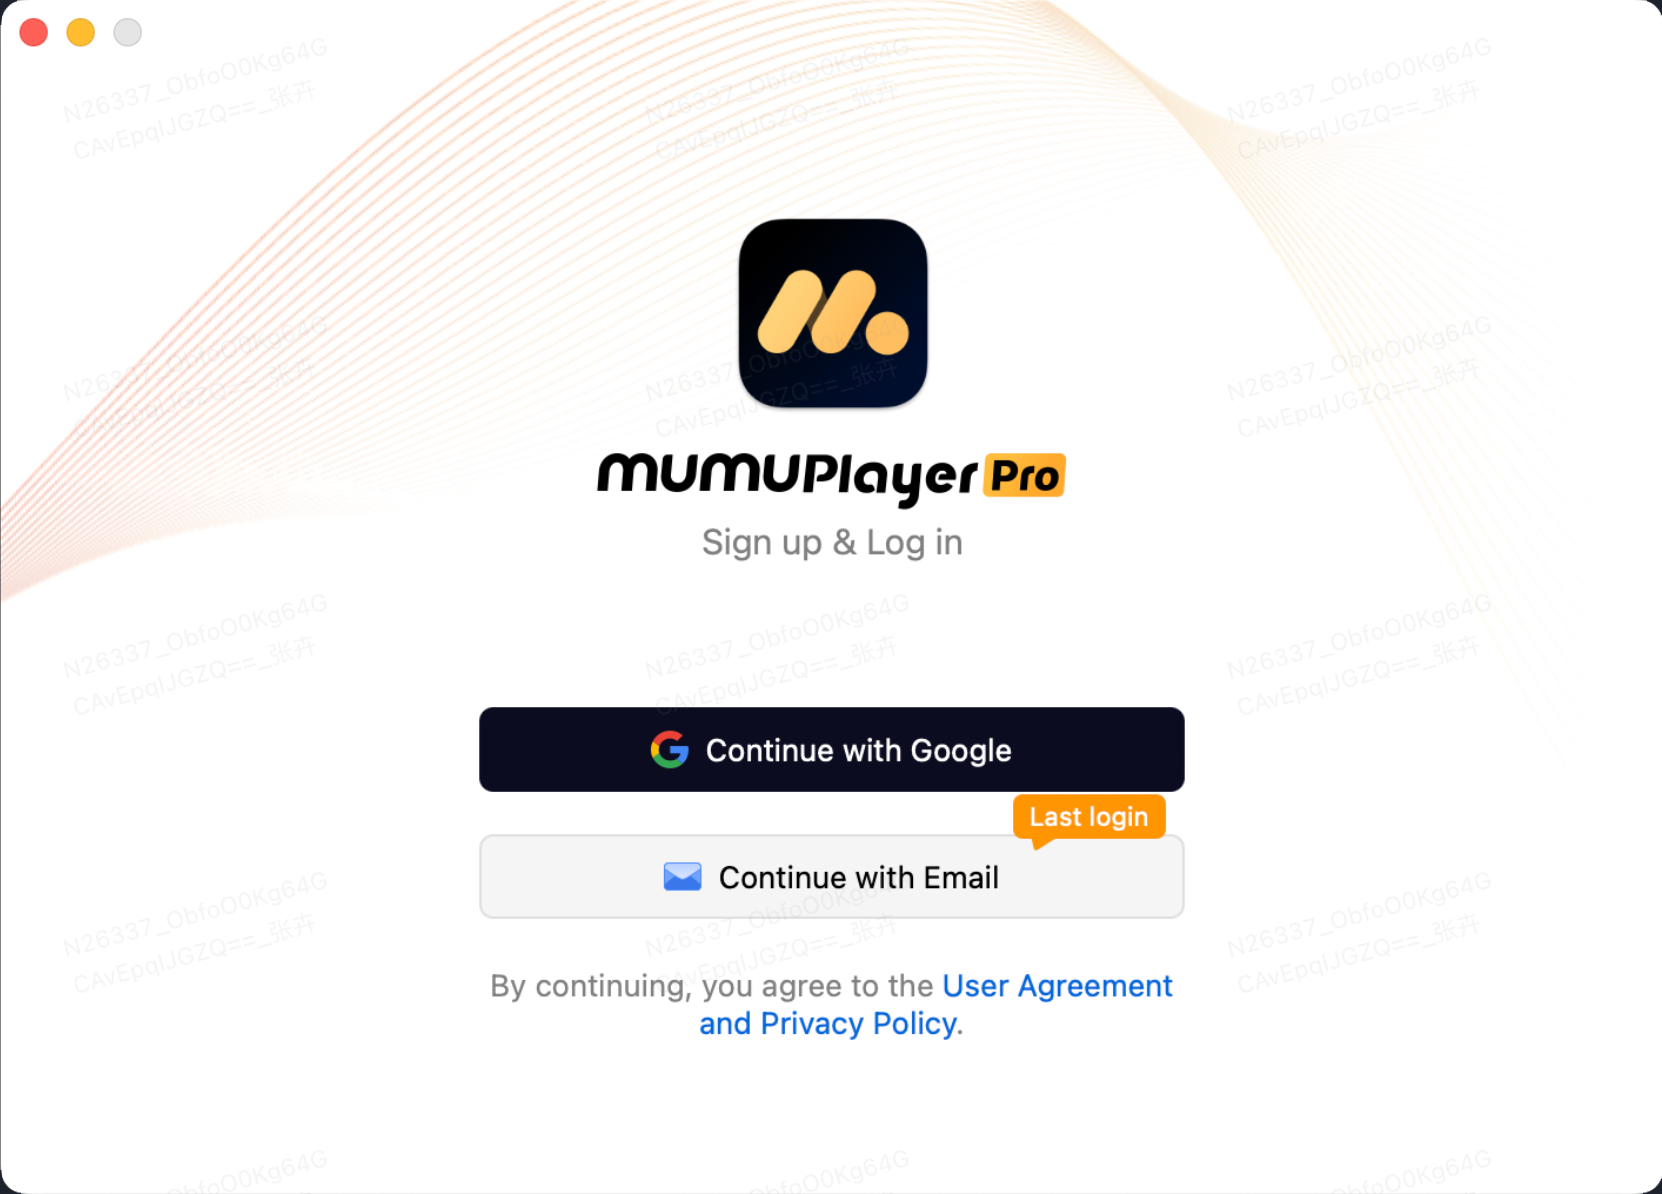 mumuplayer pro login